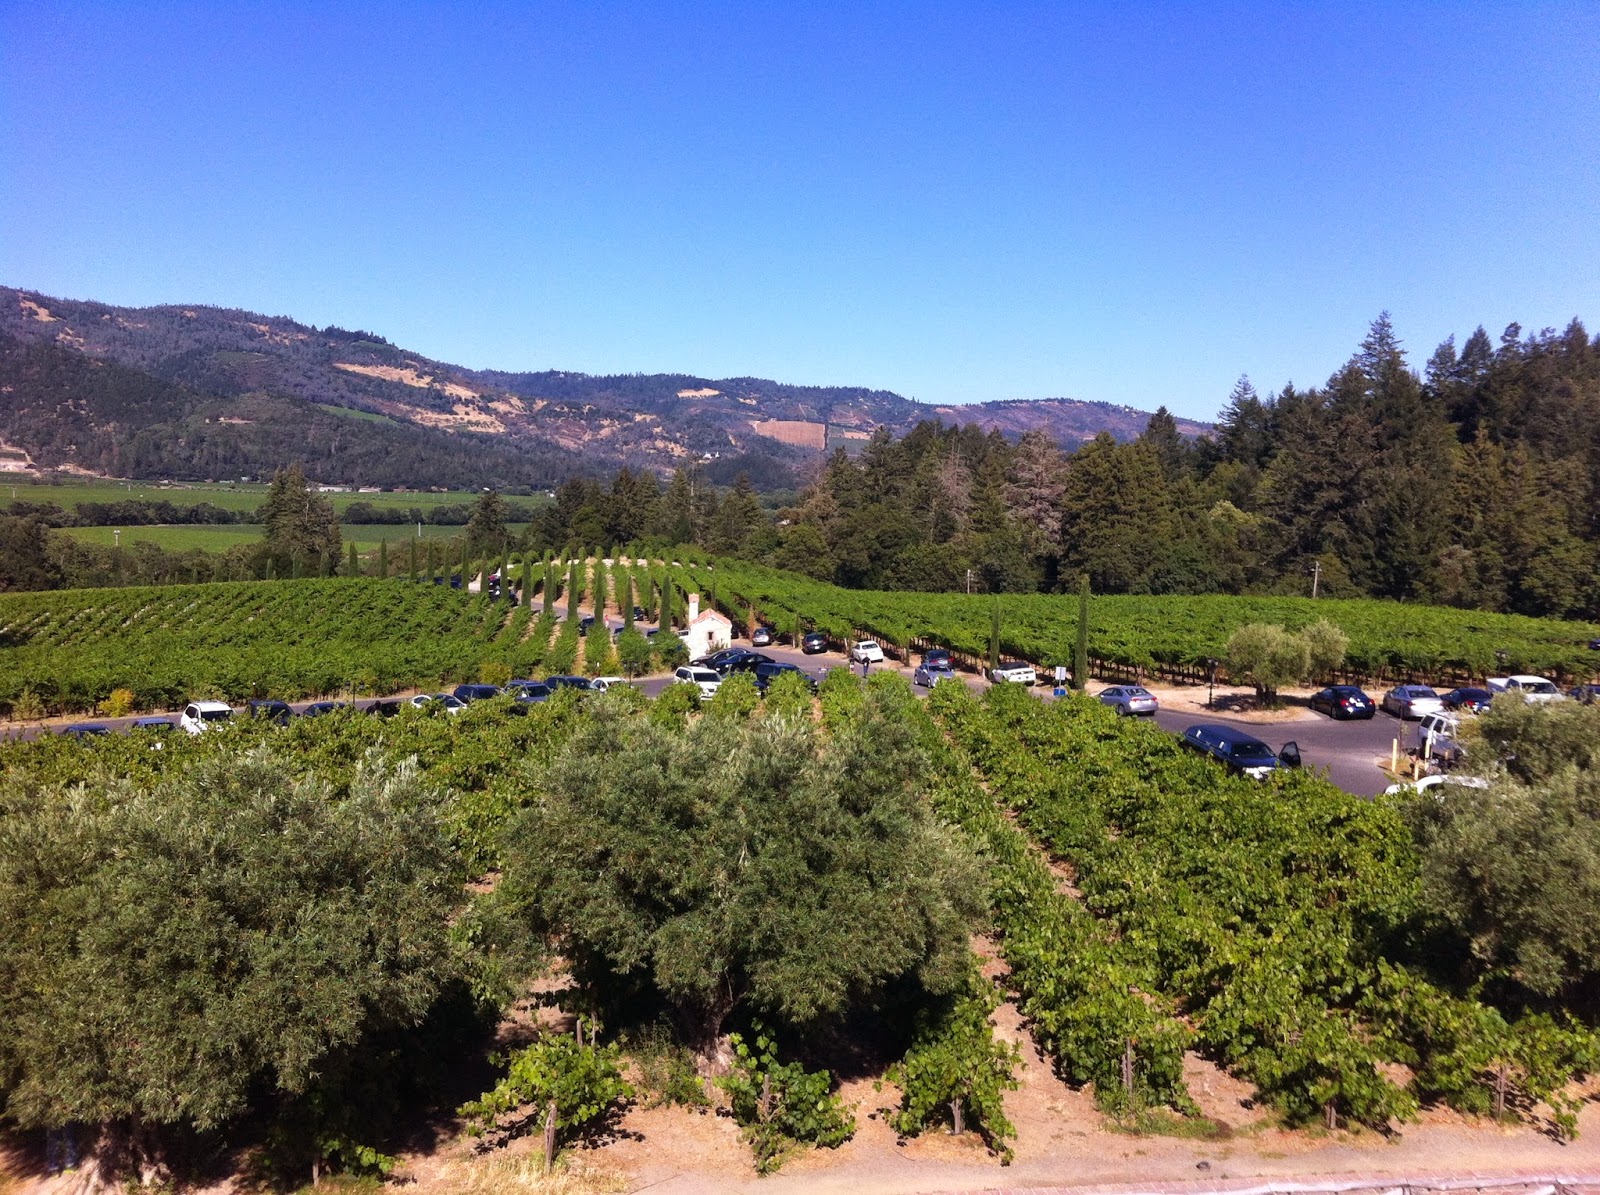 Vineyards in Sonoma Valley